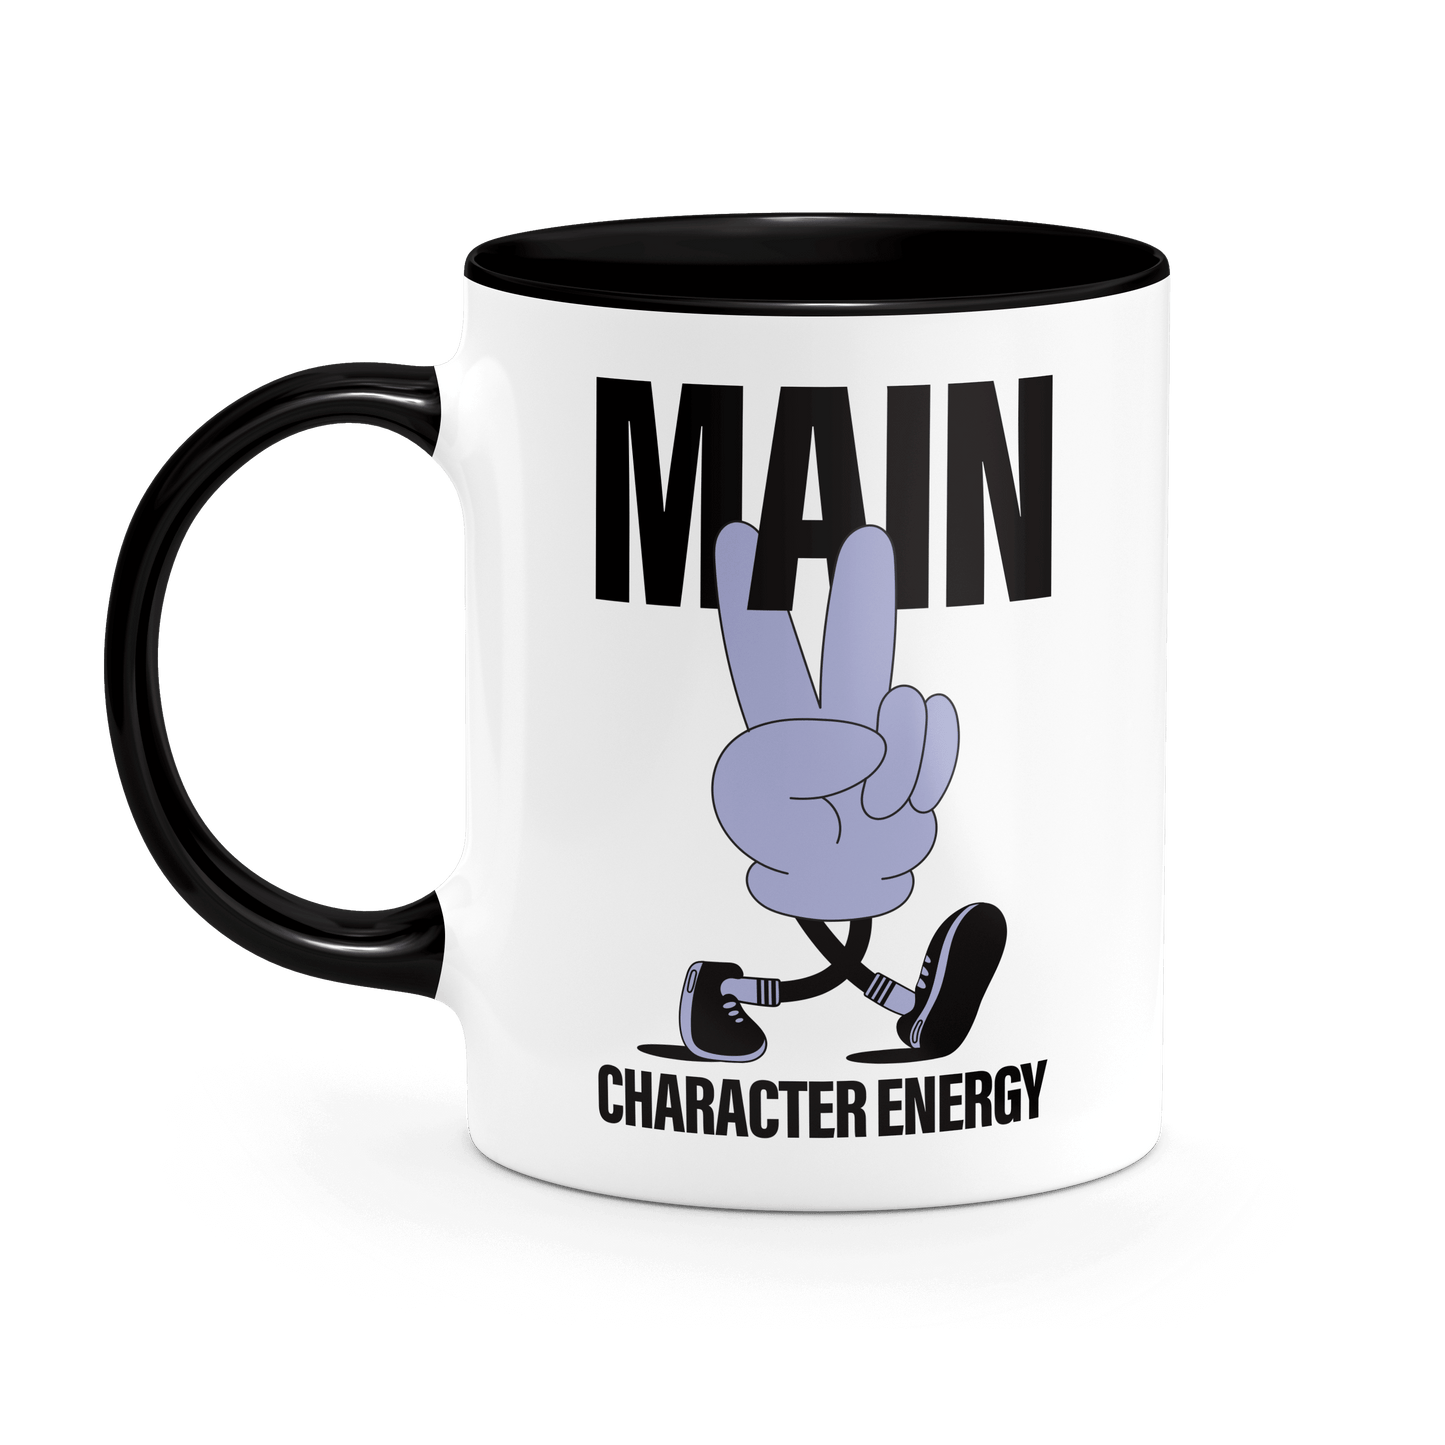 MAIN CHARACTER ENERGY MUG